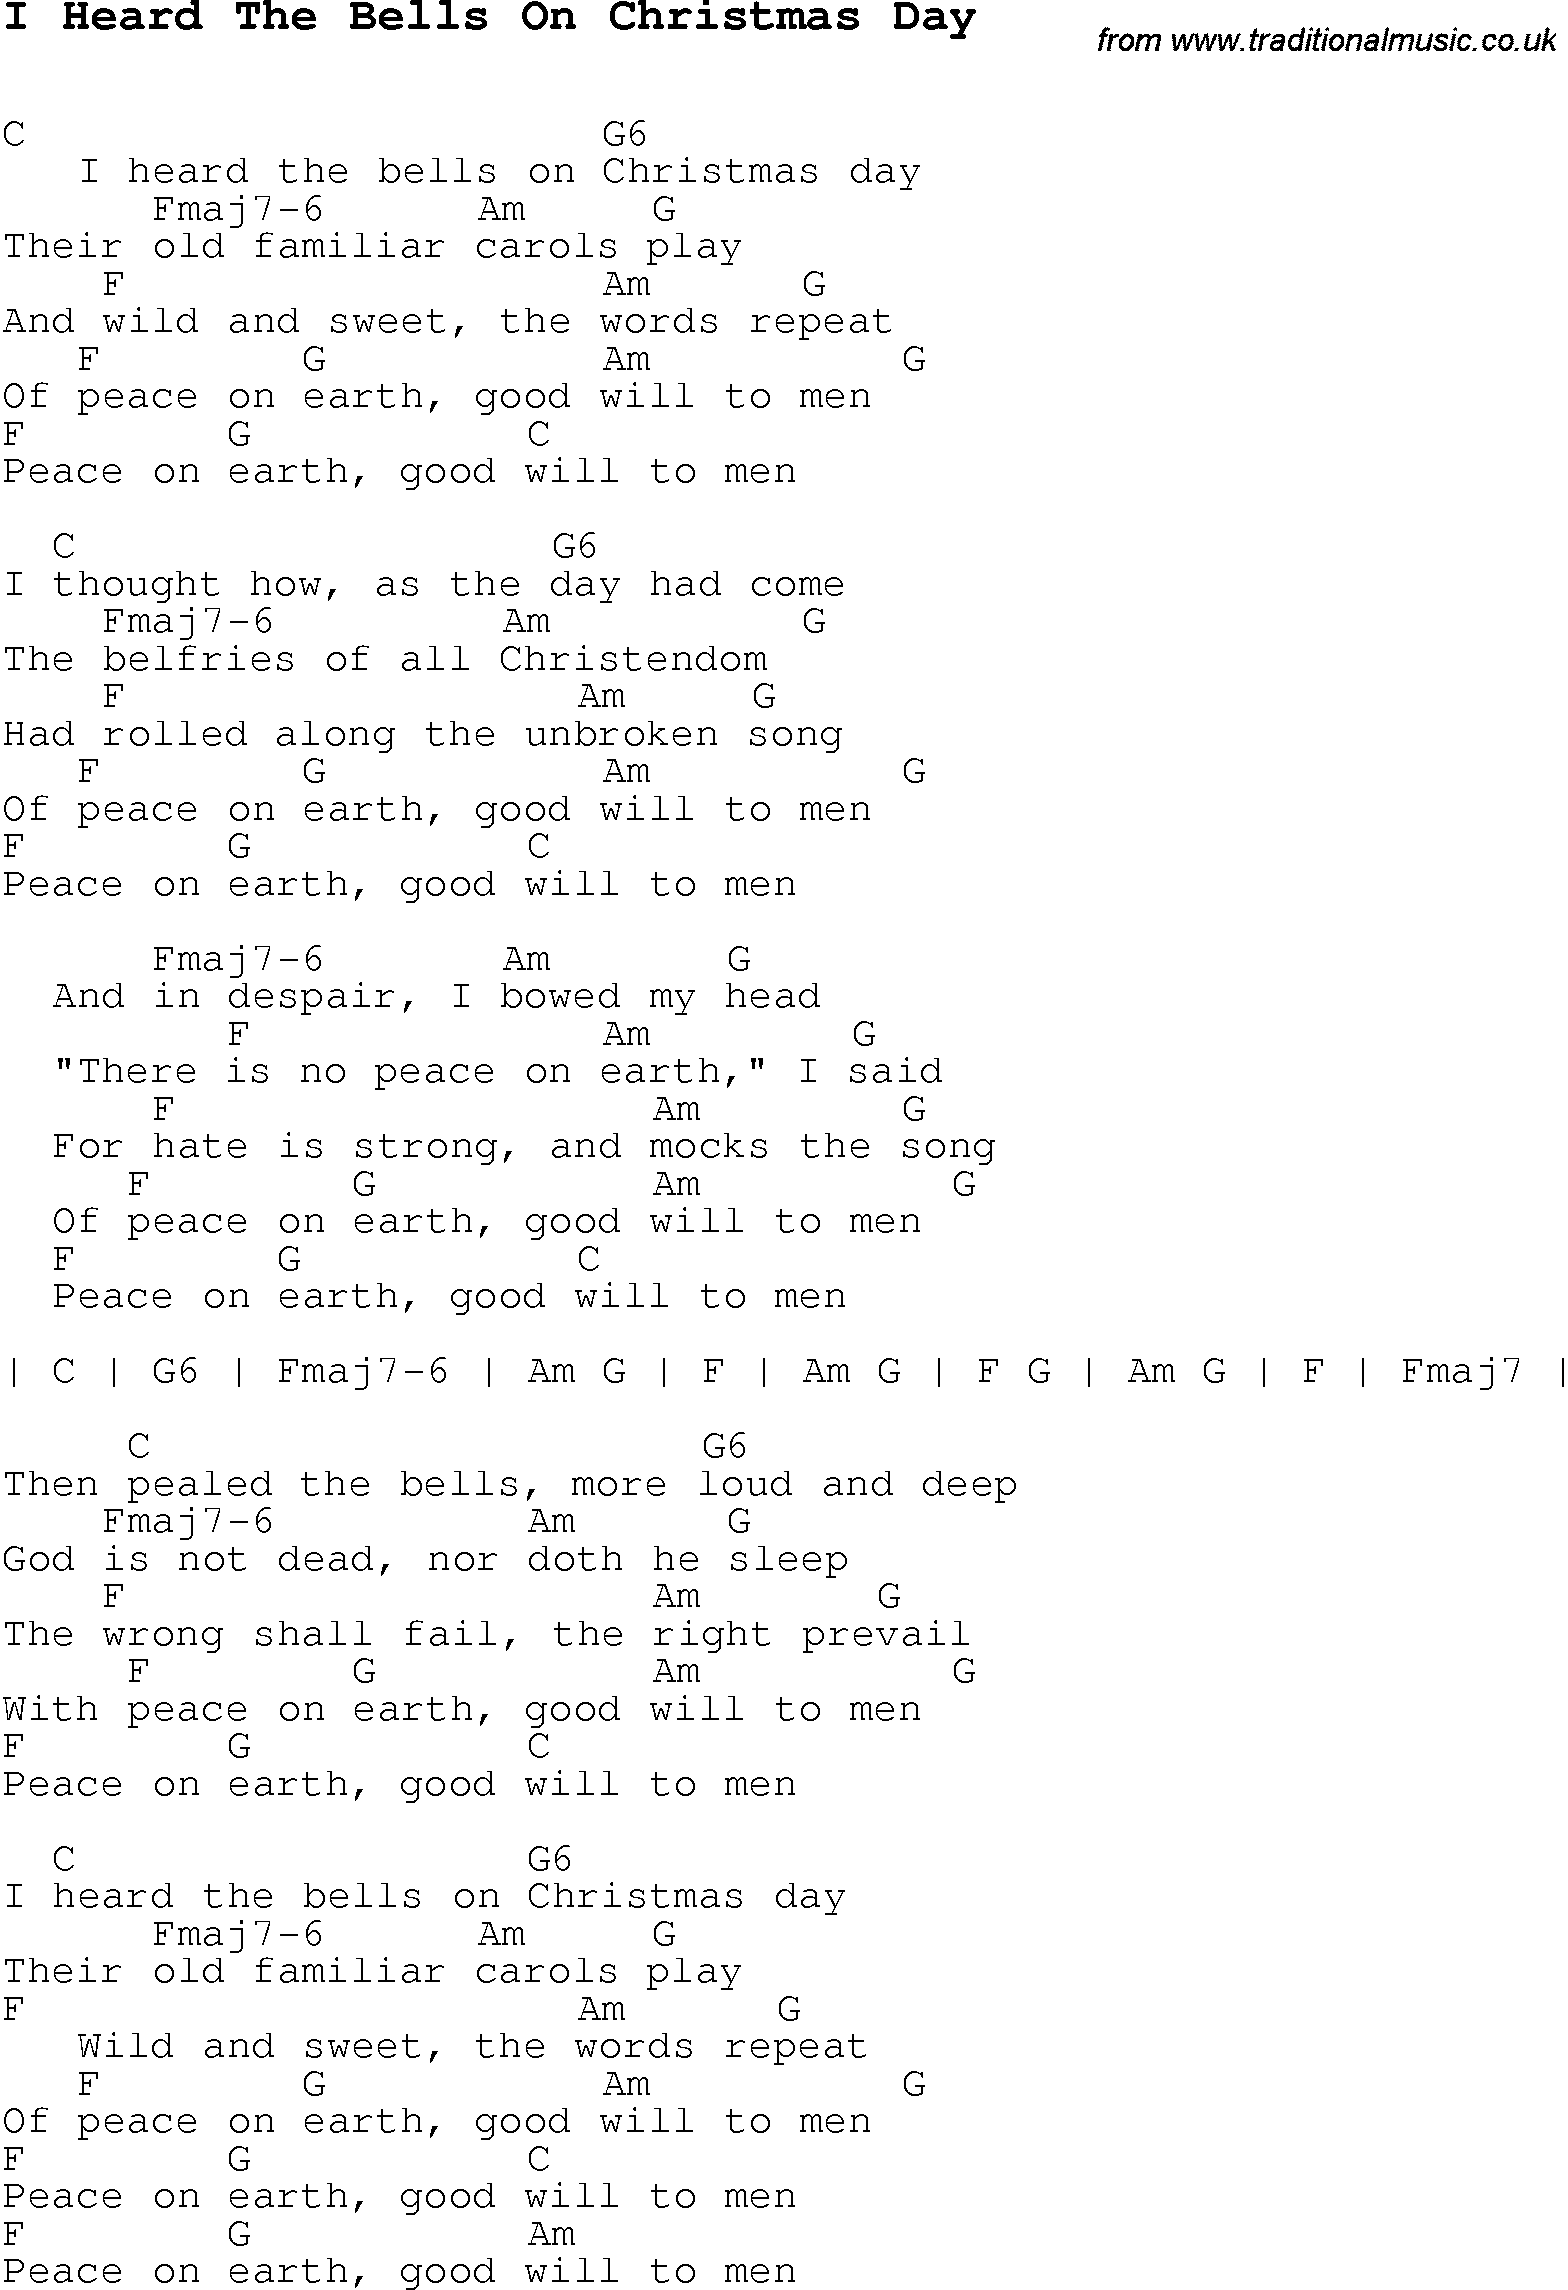 Christmas Carol/Song lyrics with chords for I Heard The Bells On Christmas Day